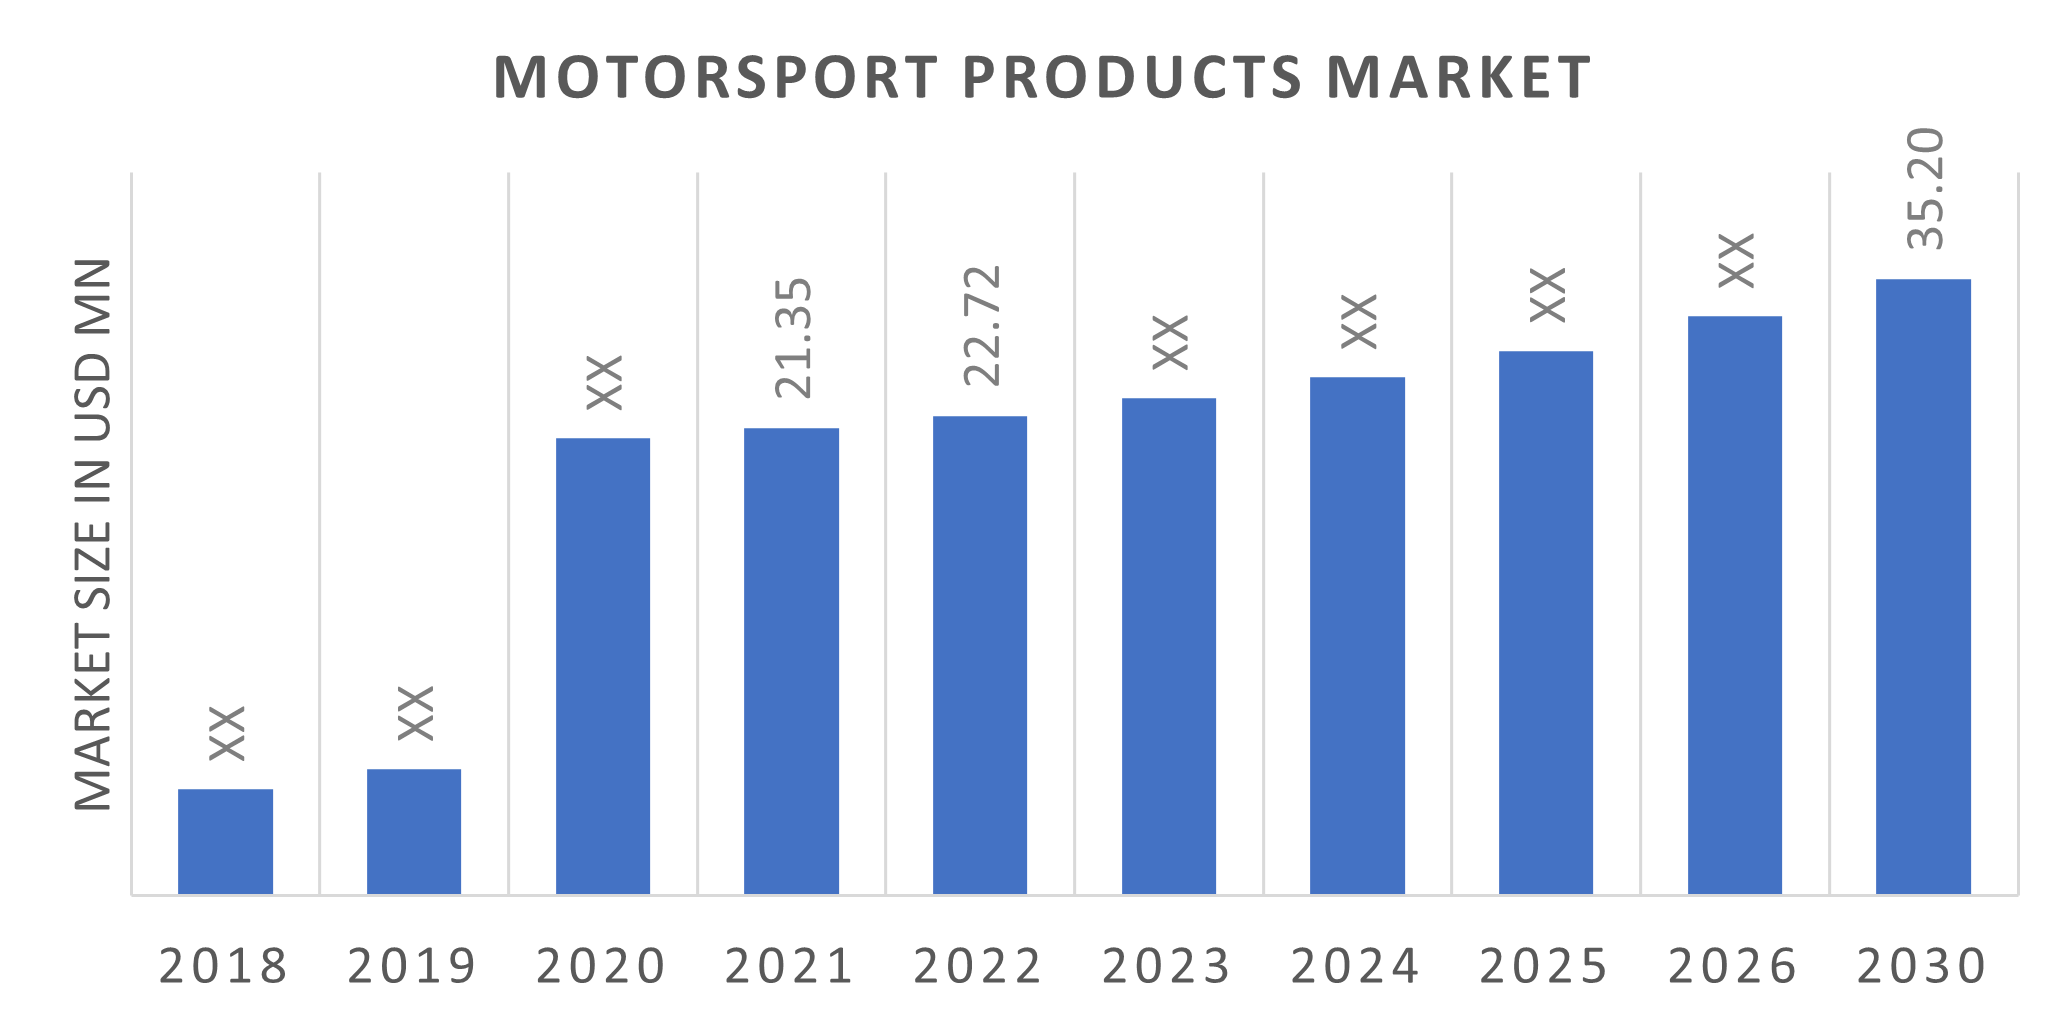 Global Motorsport Products Market Overview